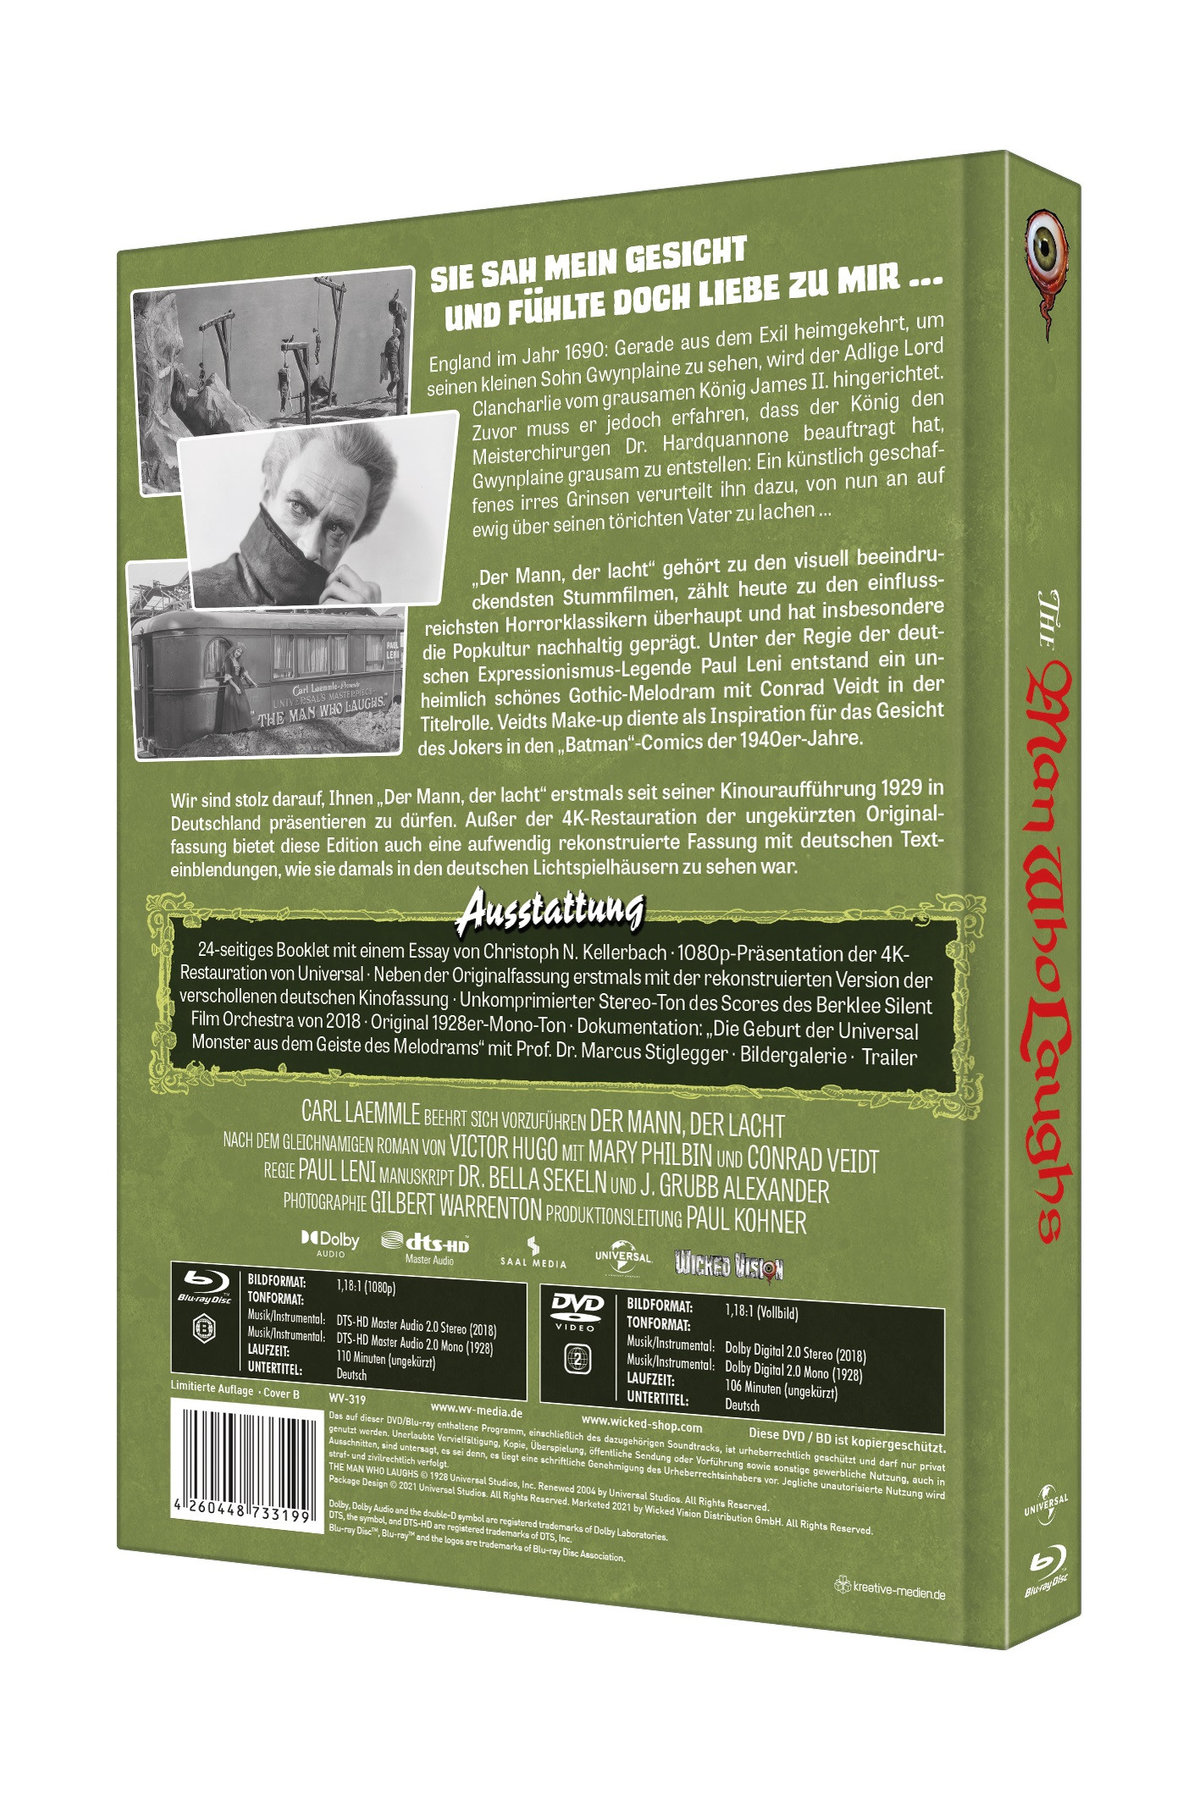 Mann der Lacht, Der - Uncut Mediabook Edition (DVD+blu-ray) (B)